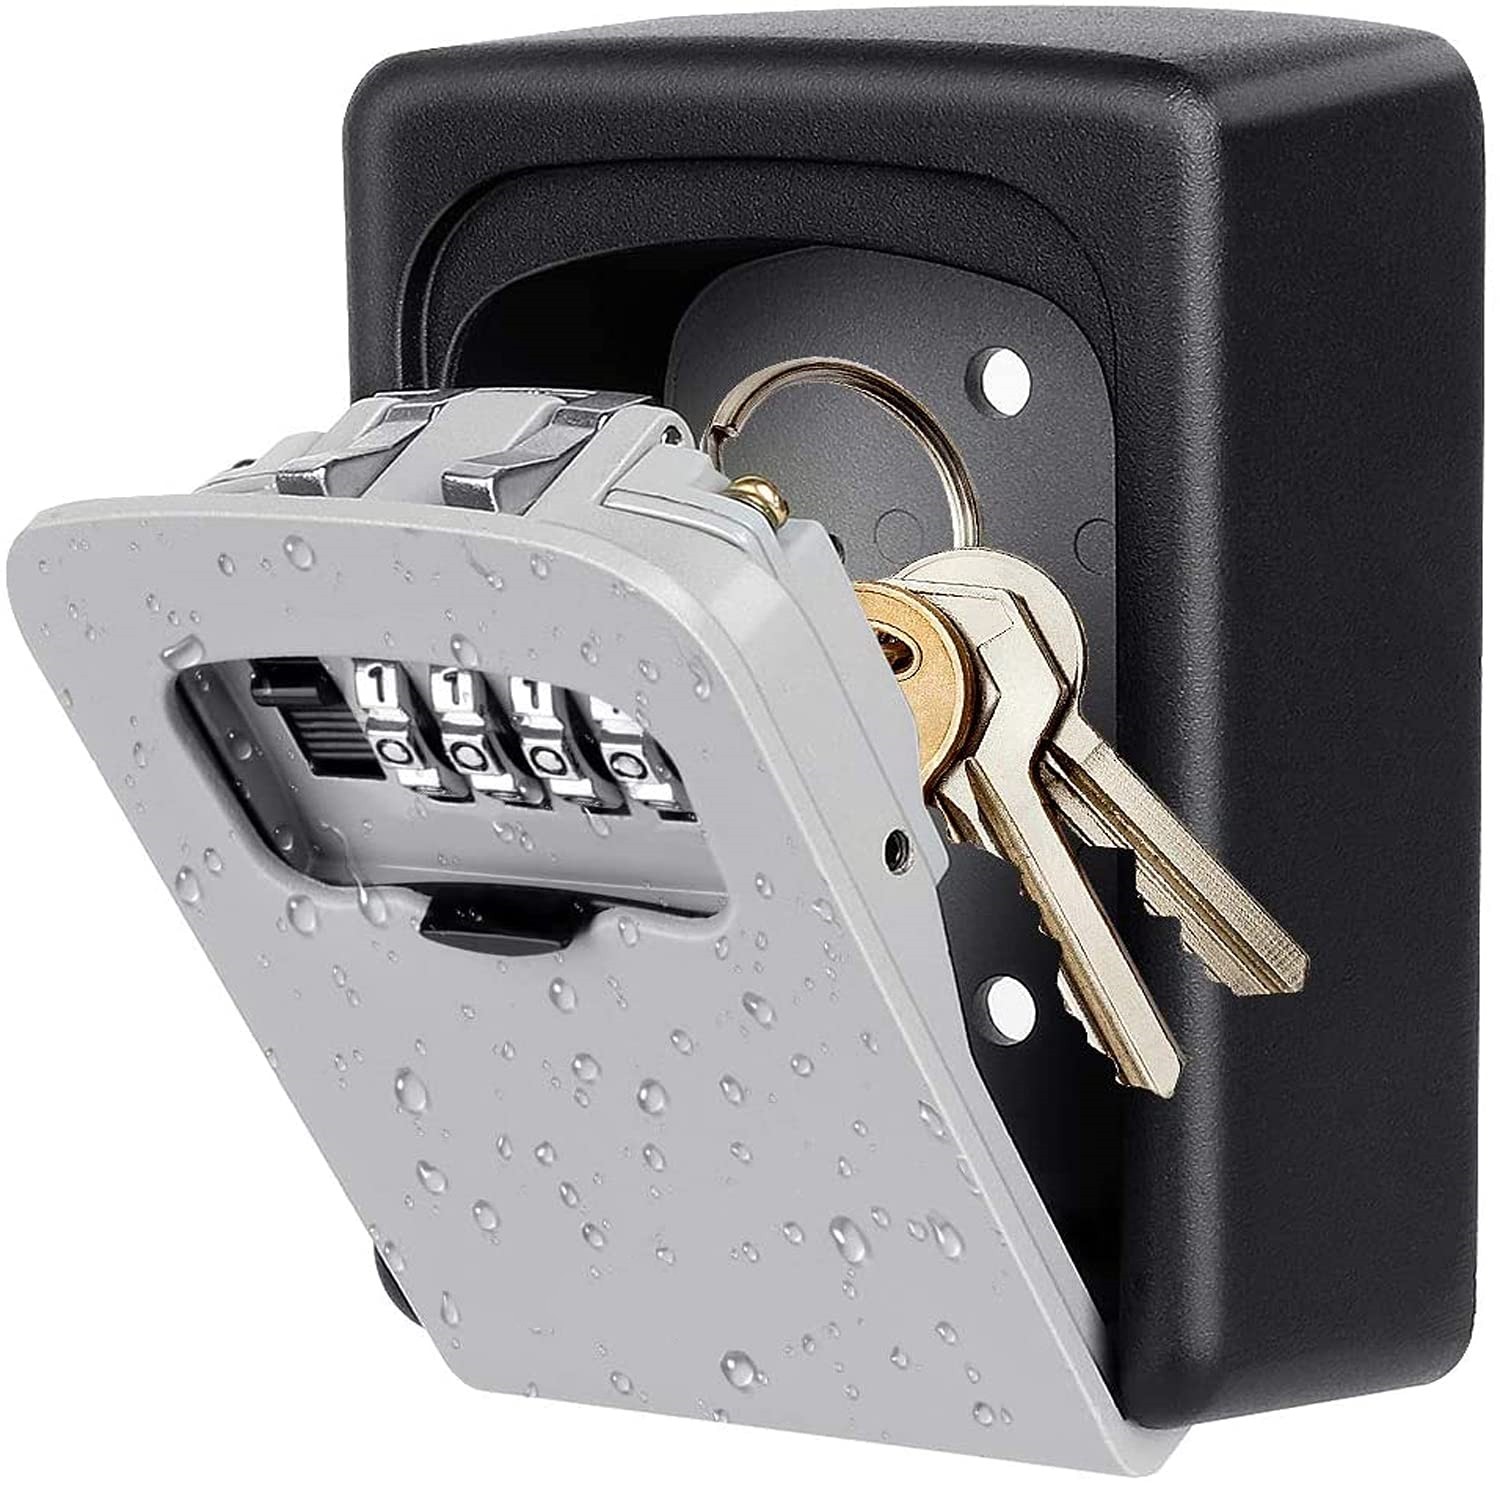 Full Metal Shell Combination Lock Key Box